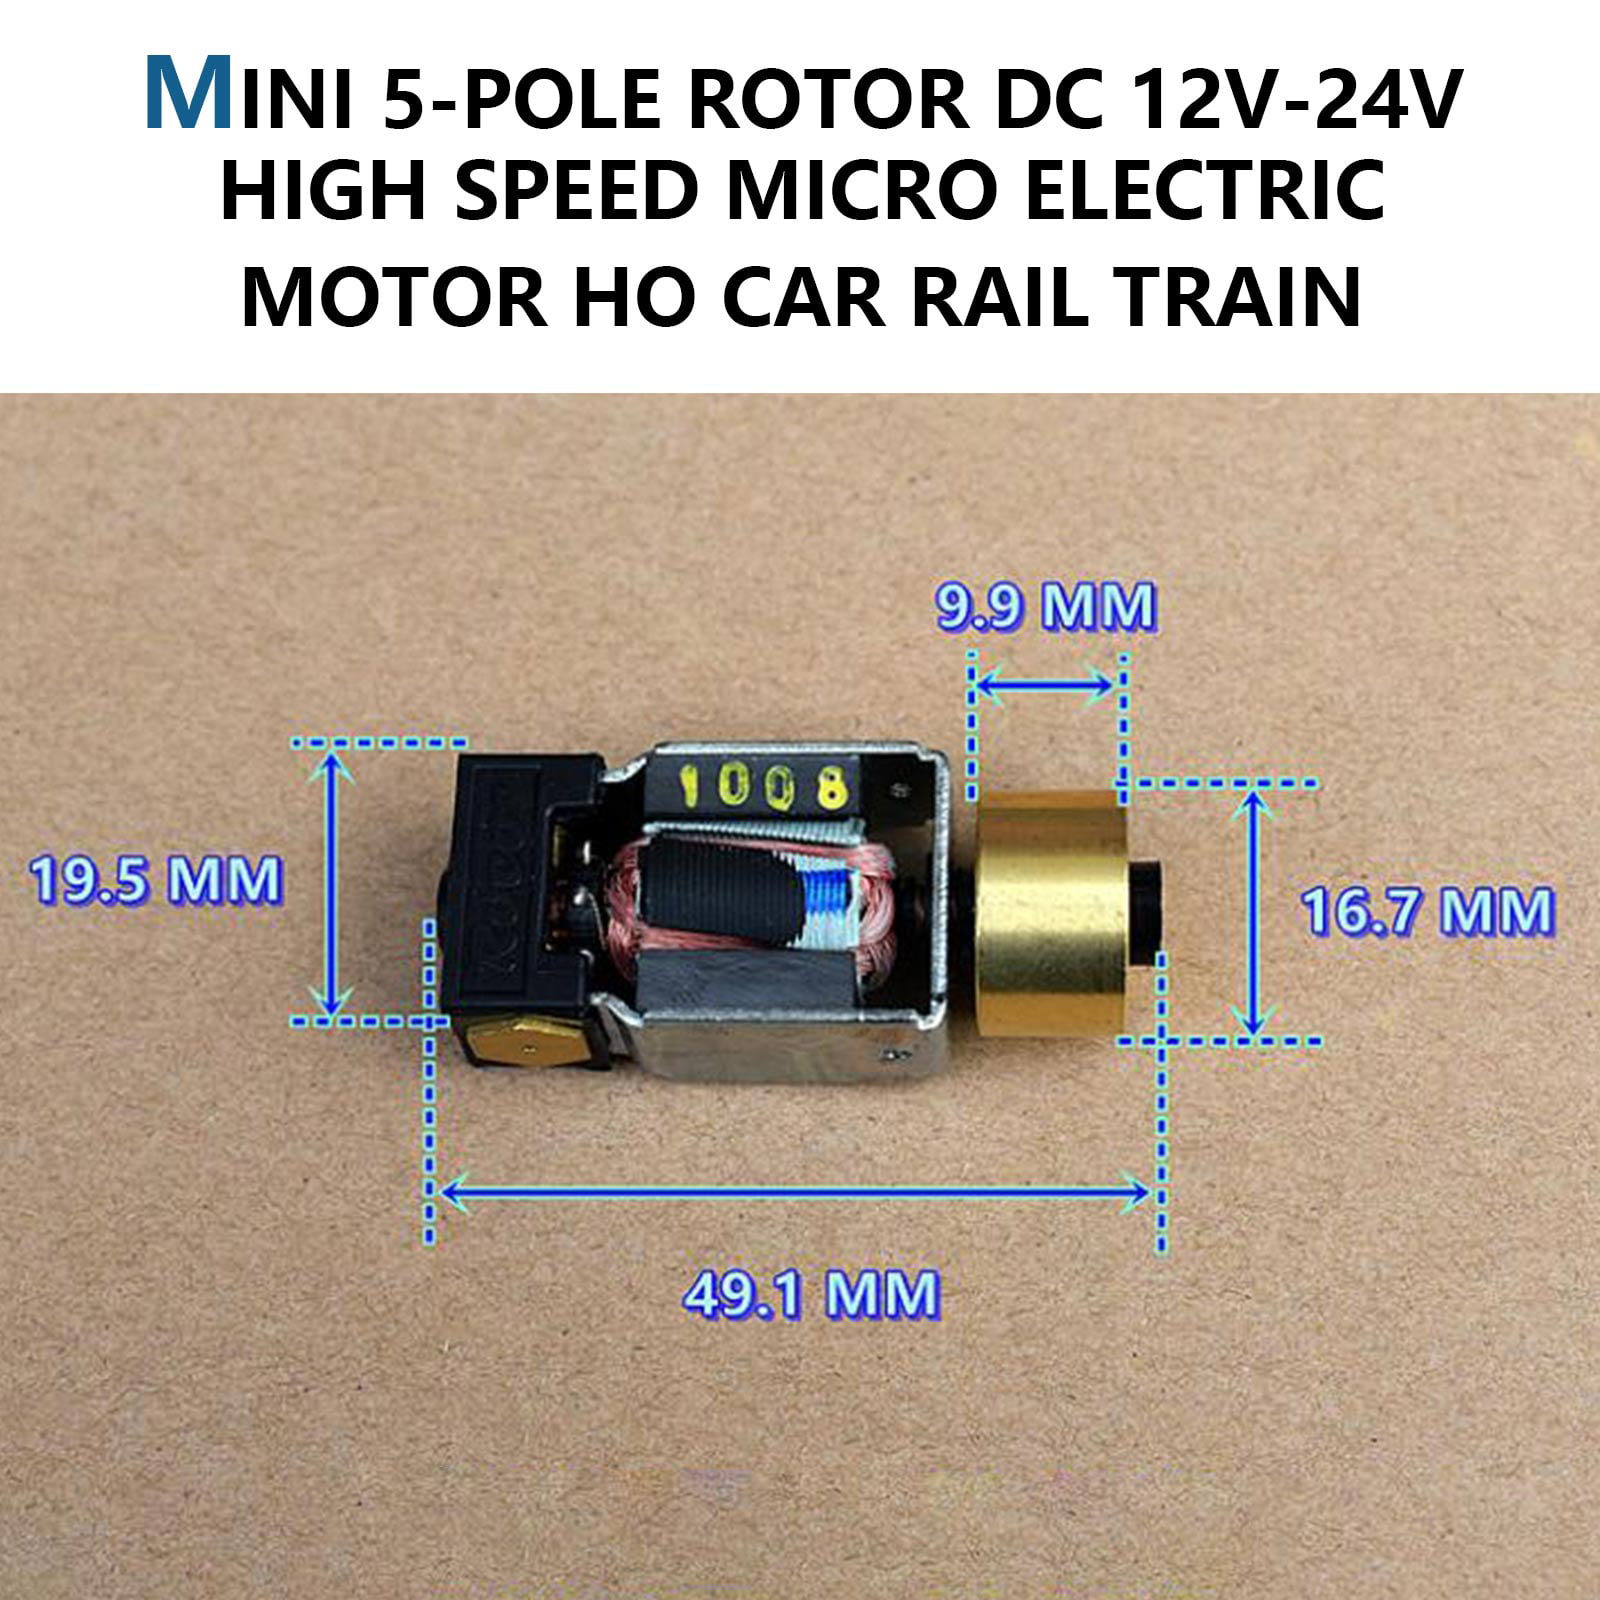 DC12V-24V High Speed Mini 5-pole Rotor Motor Dual Flywheel HO Car Rail Train Toy 